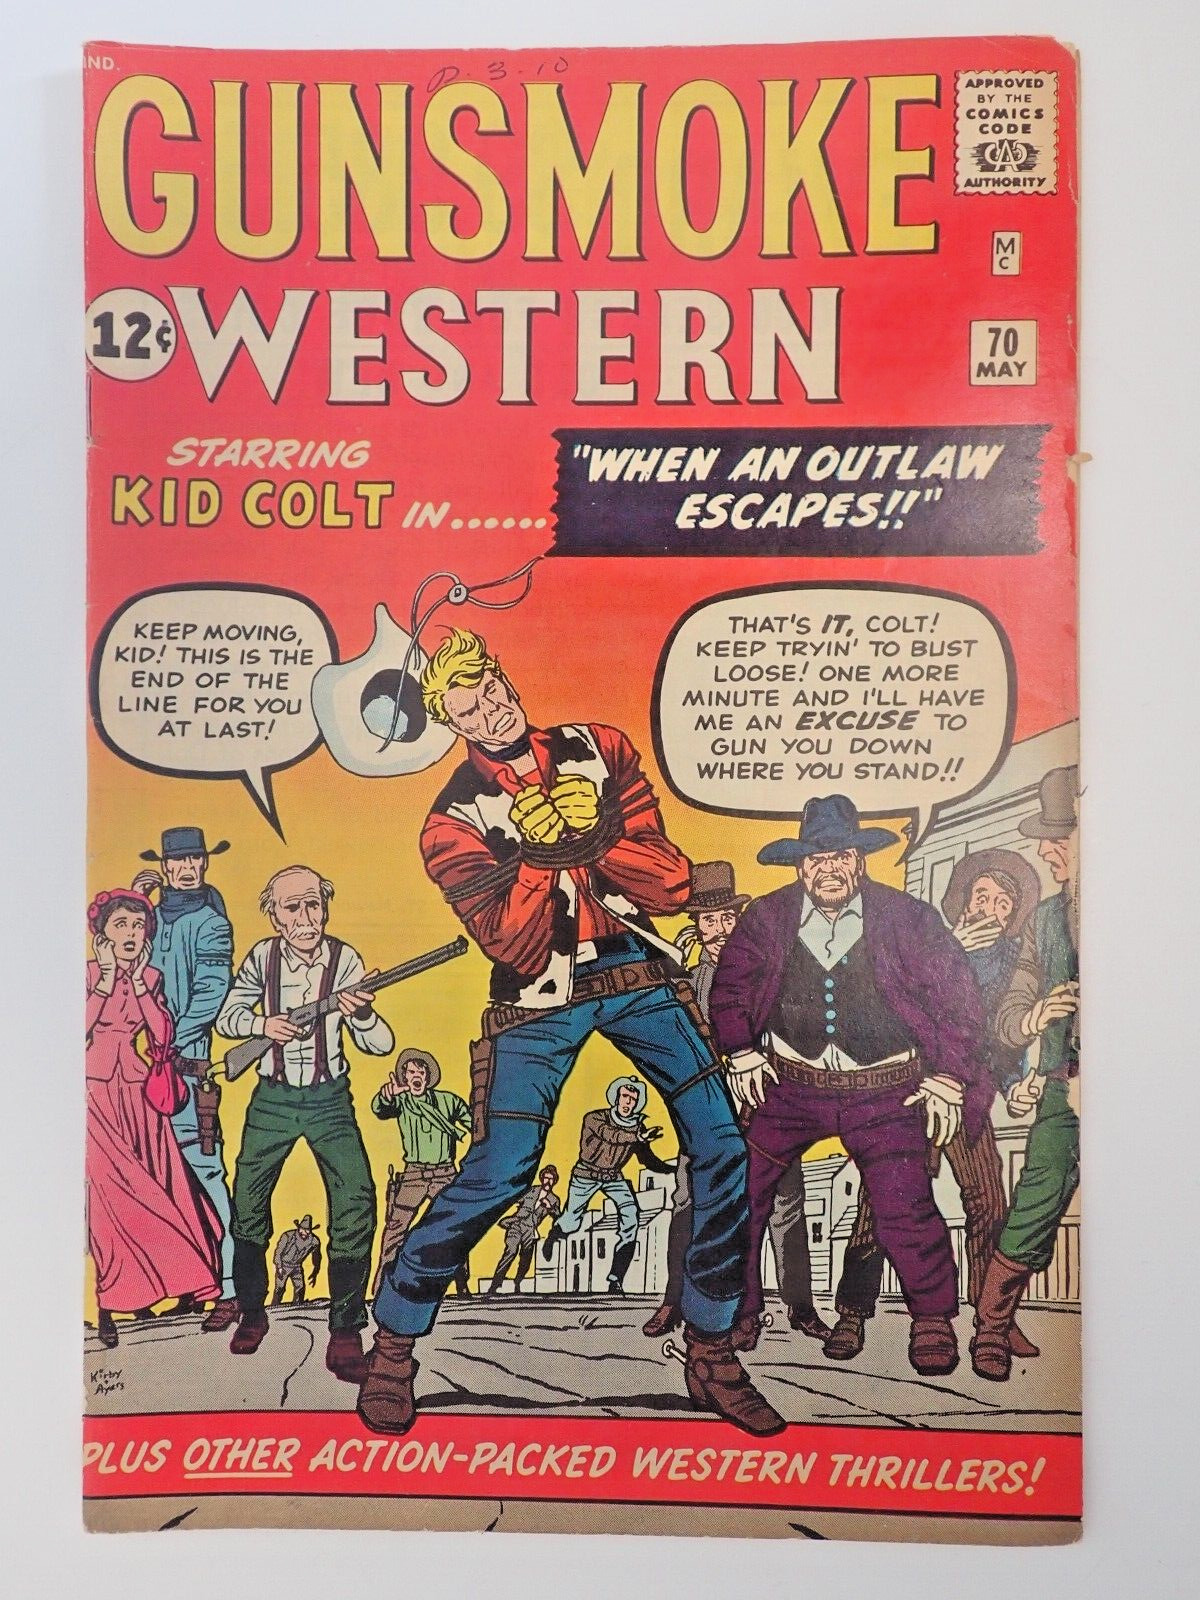 1962 Gunsmoke Western # 70 Marvel Comics Silver Age